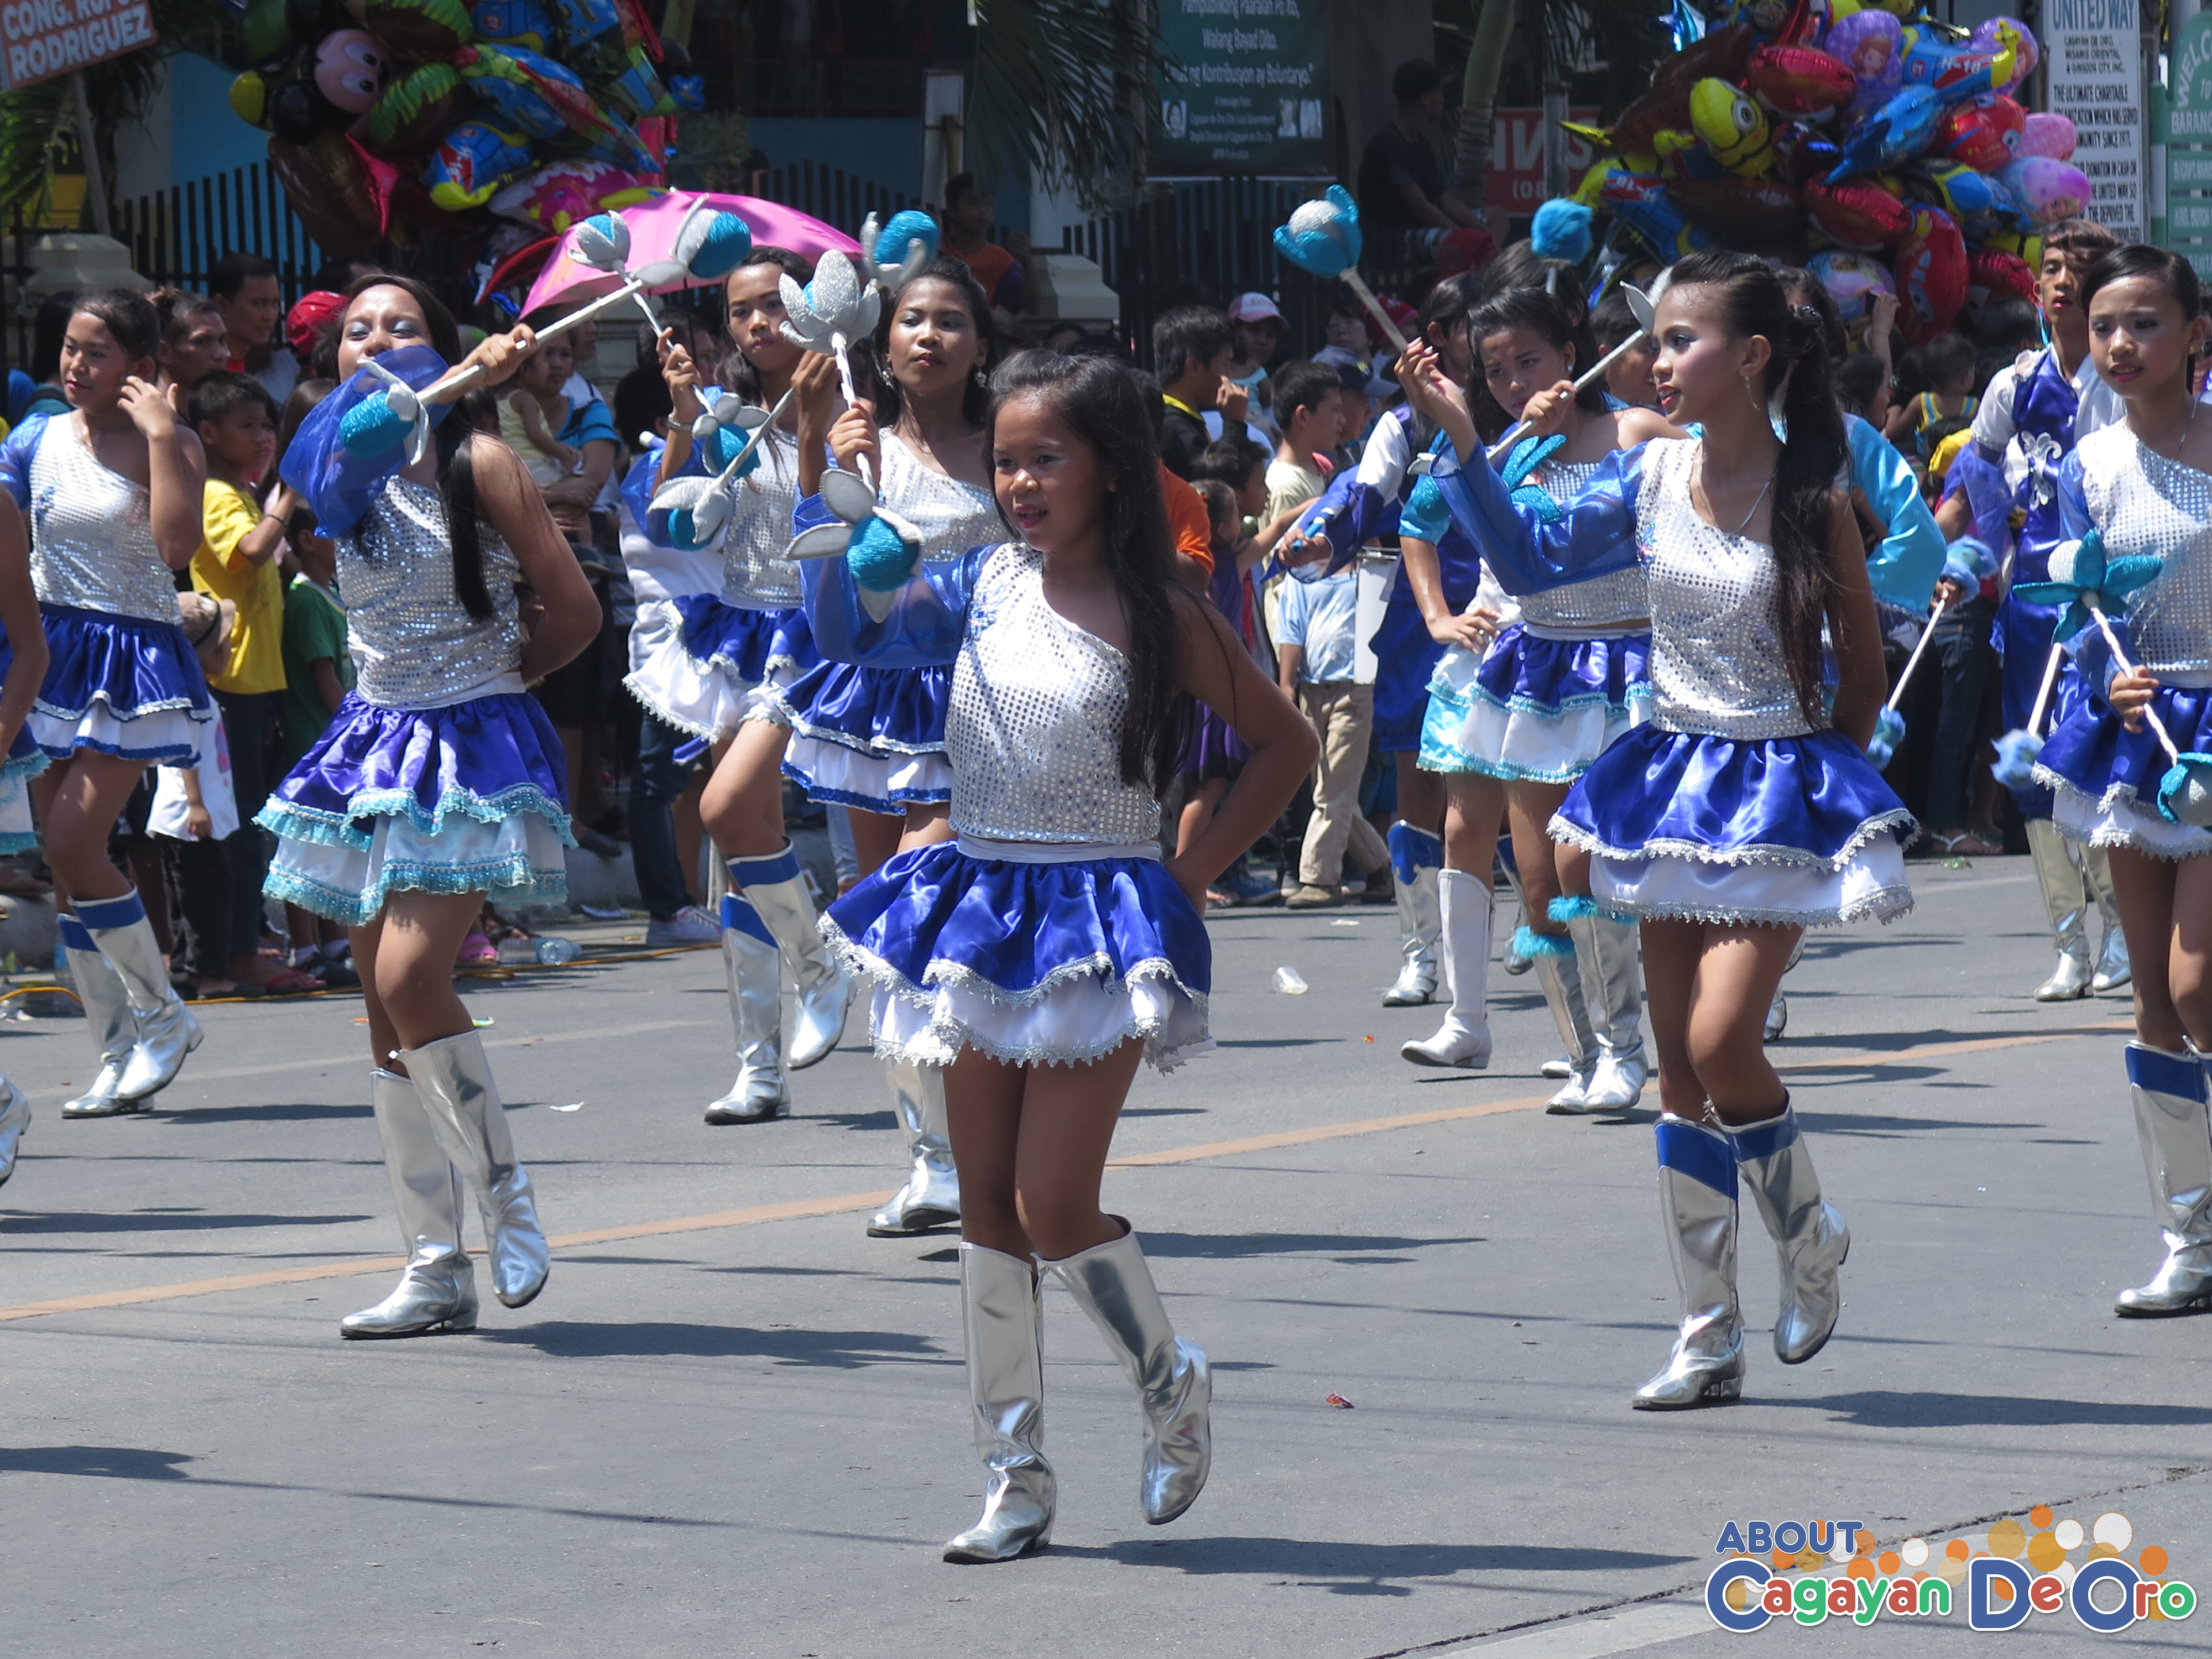 Lapasan National High School at Cagayan de Oro The Higalas Parade of Floats and Icons 2015